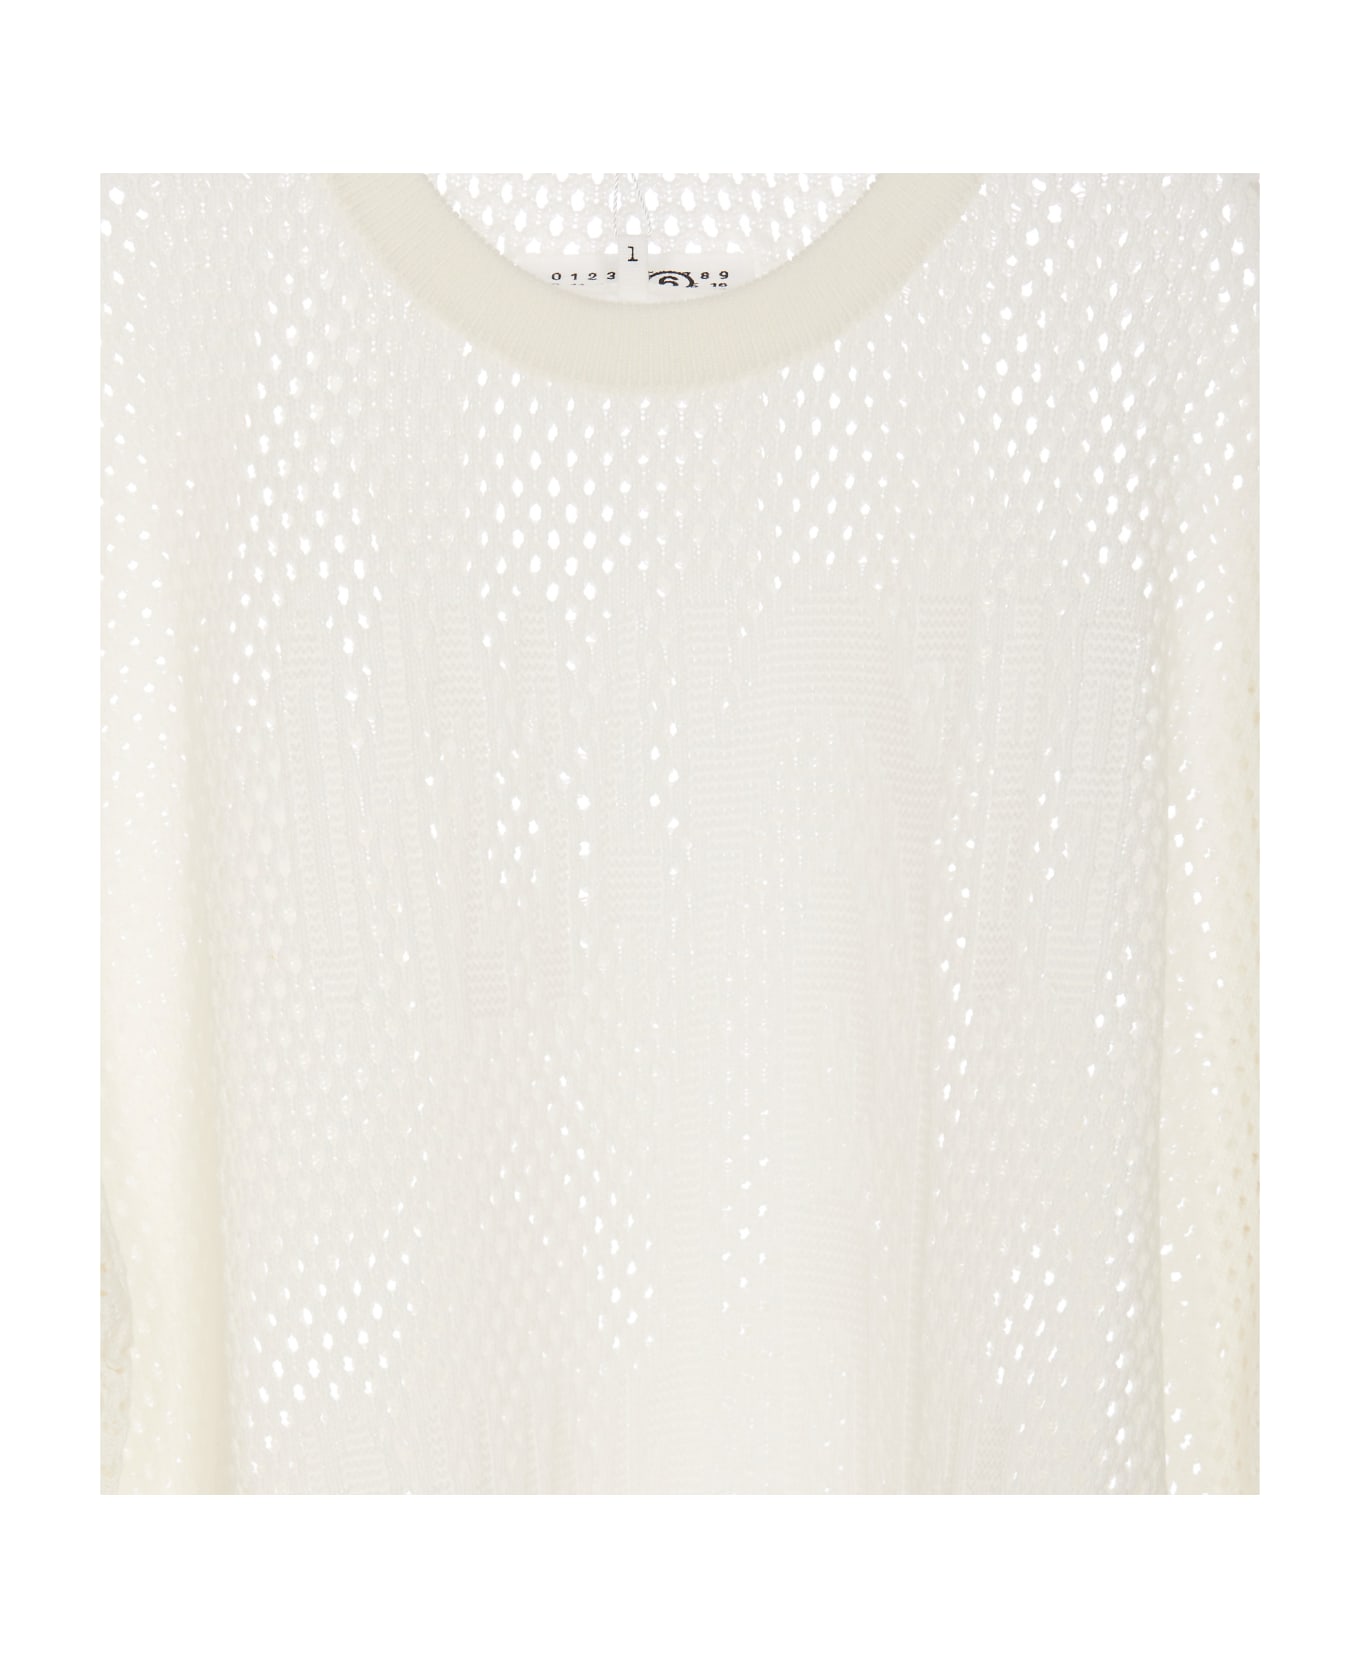 MM6 Maison Margiela Net Long Sweater - White